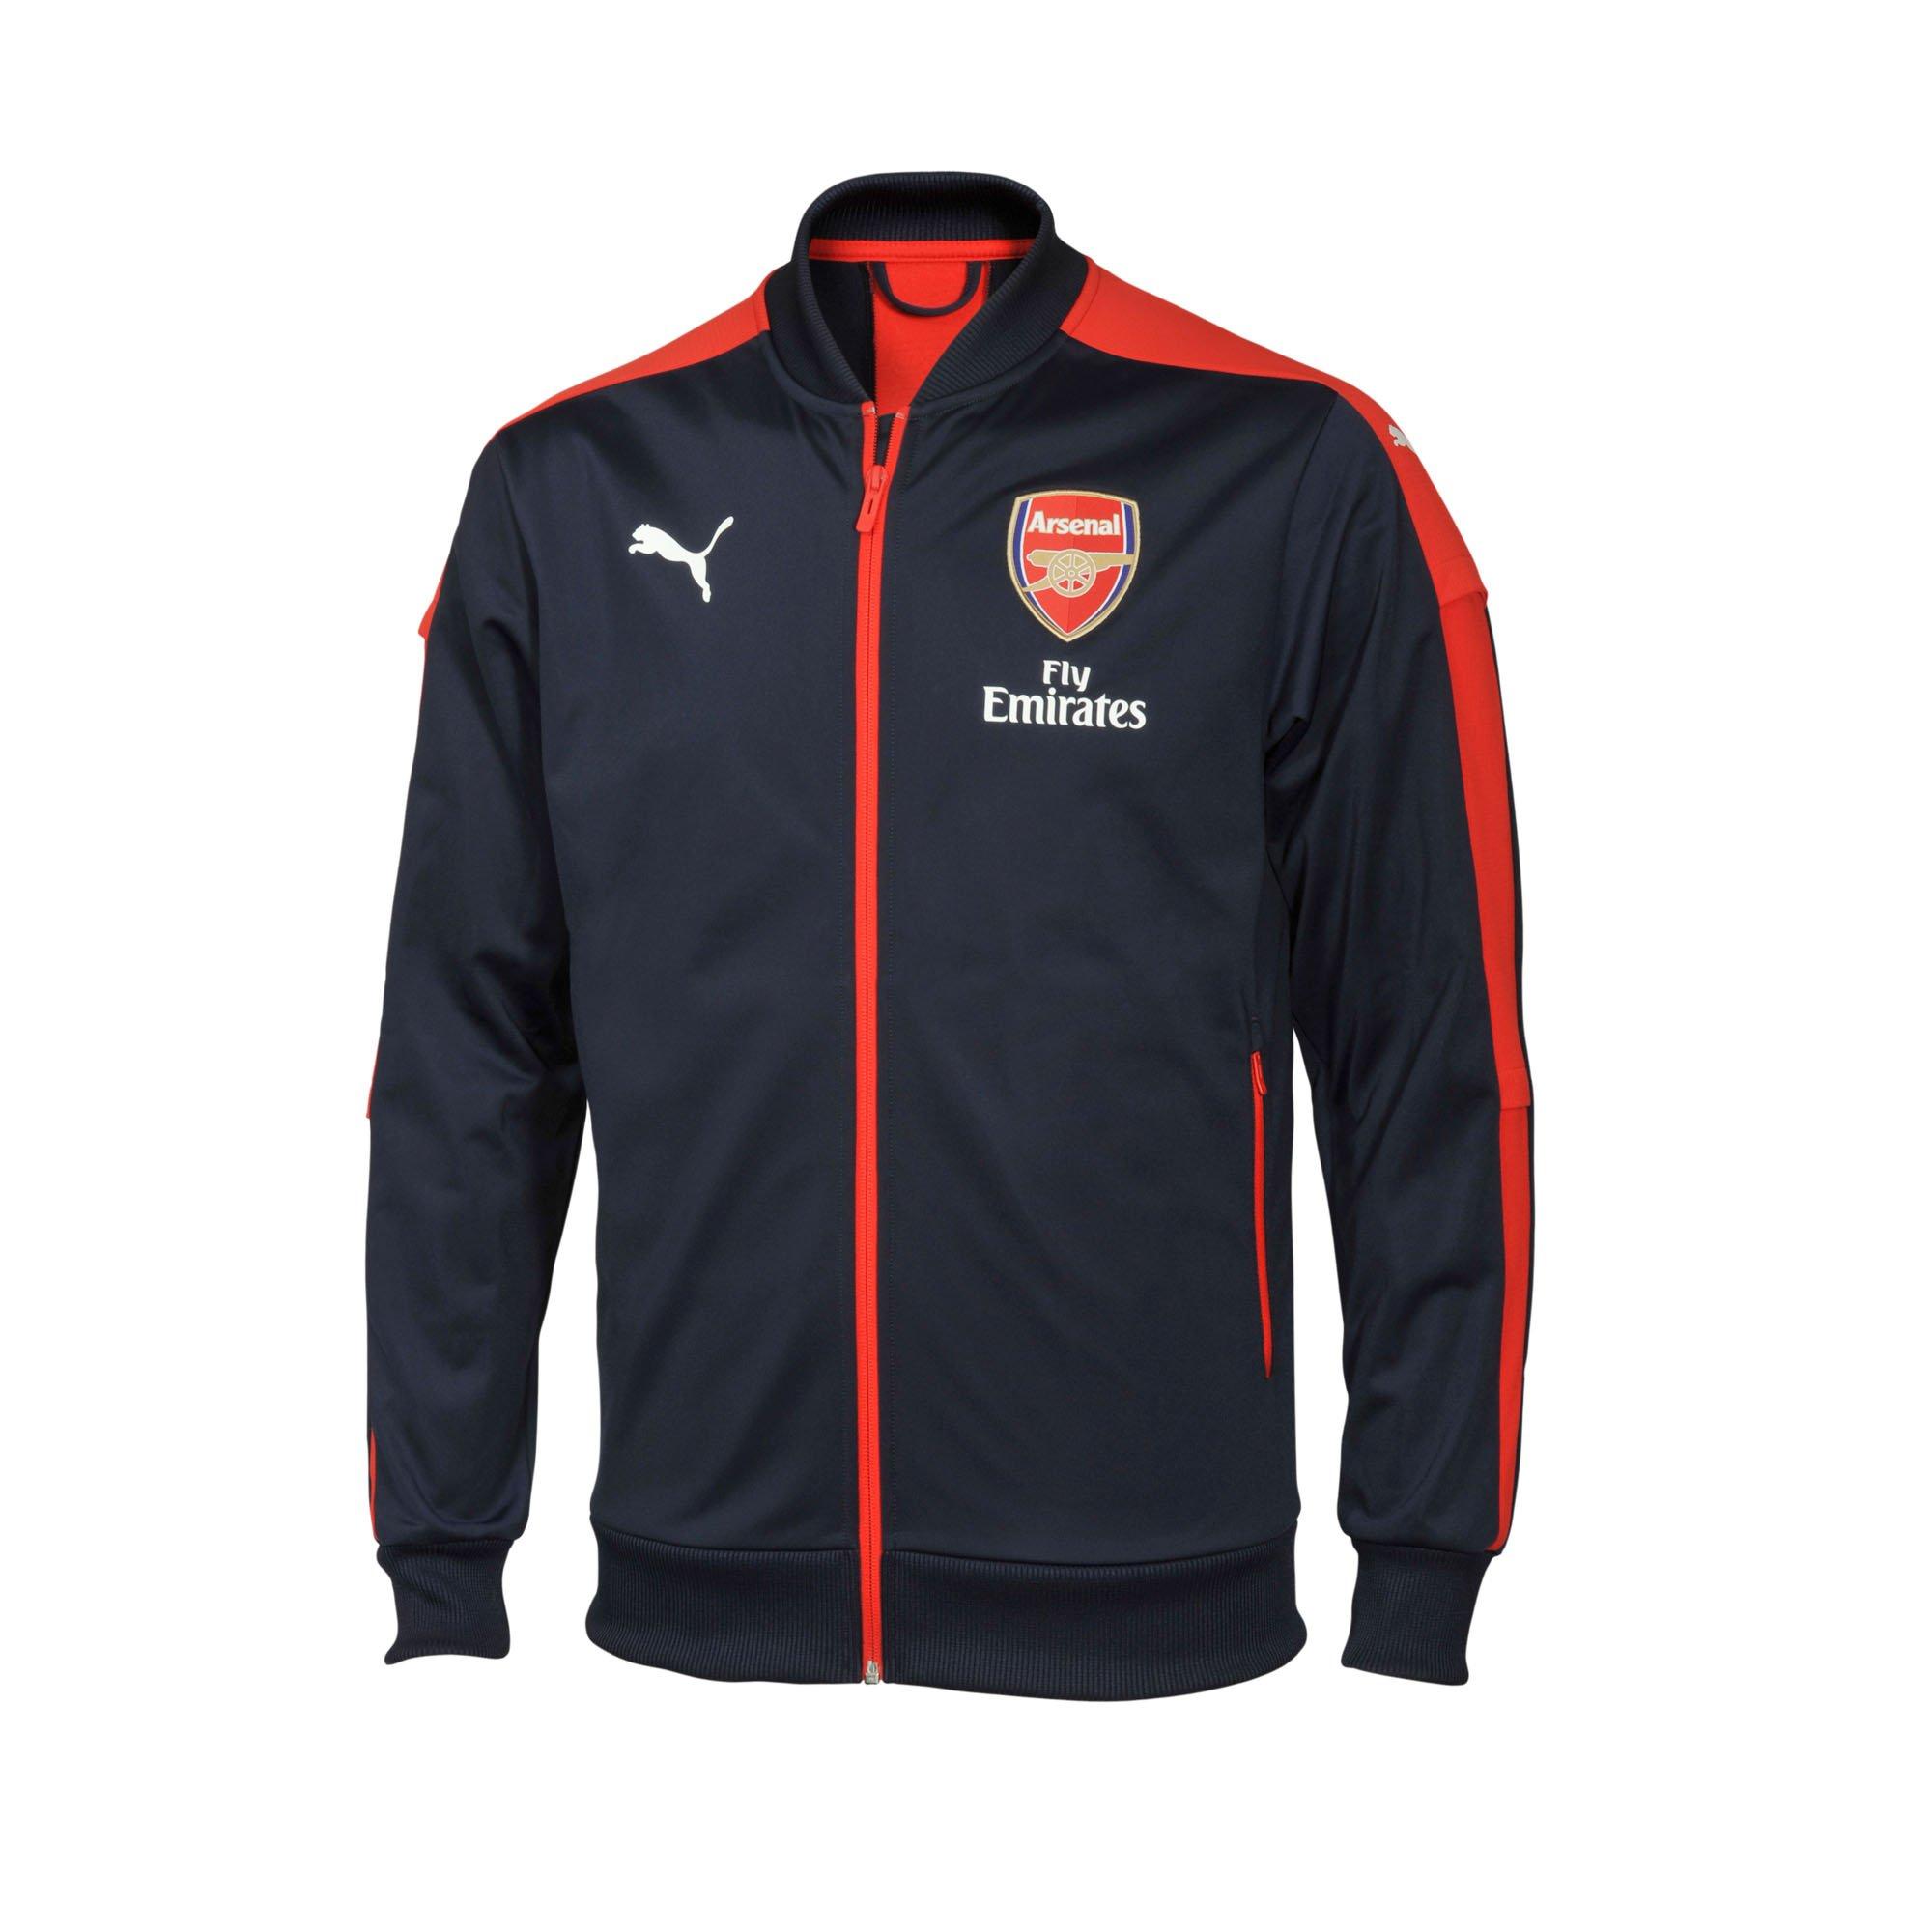 Arsenal Junior 2016/17 Stadium Jacket